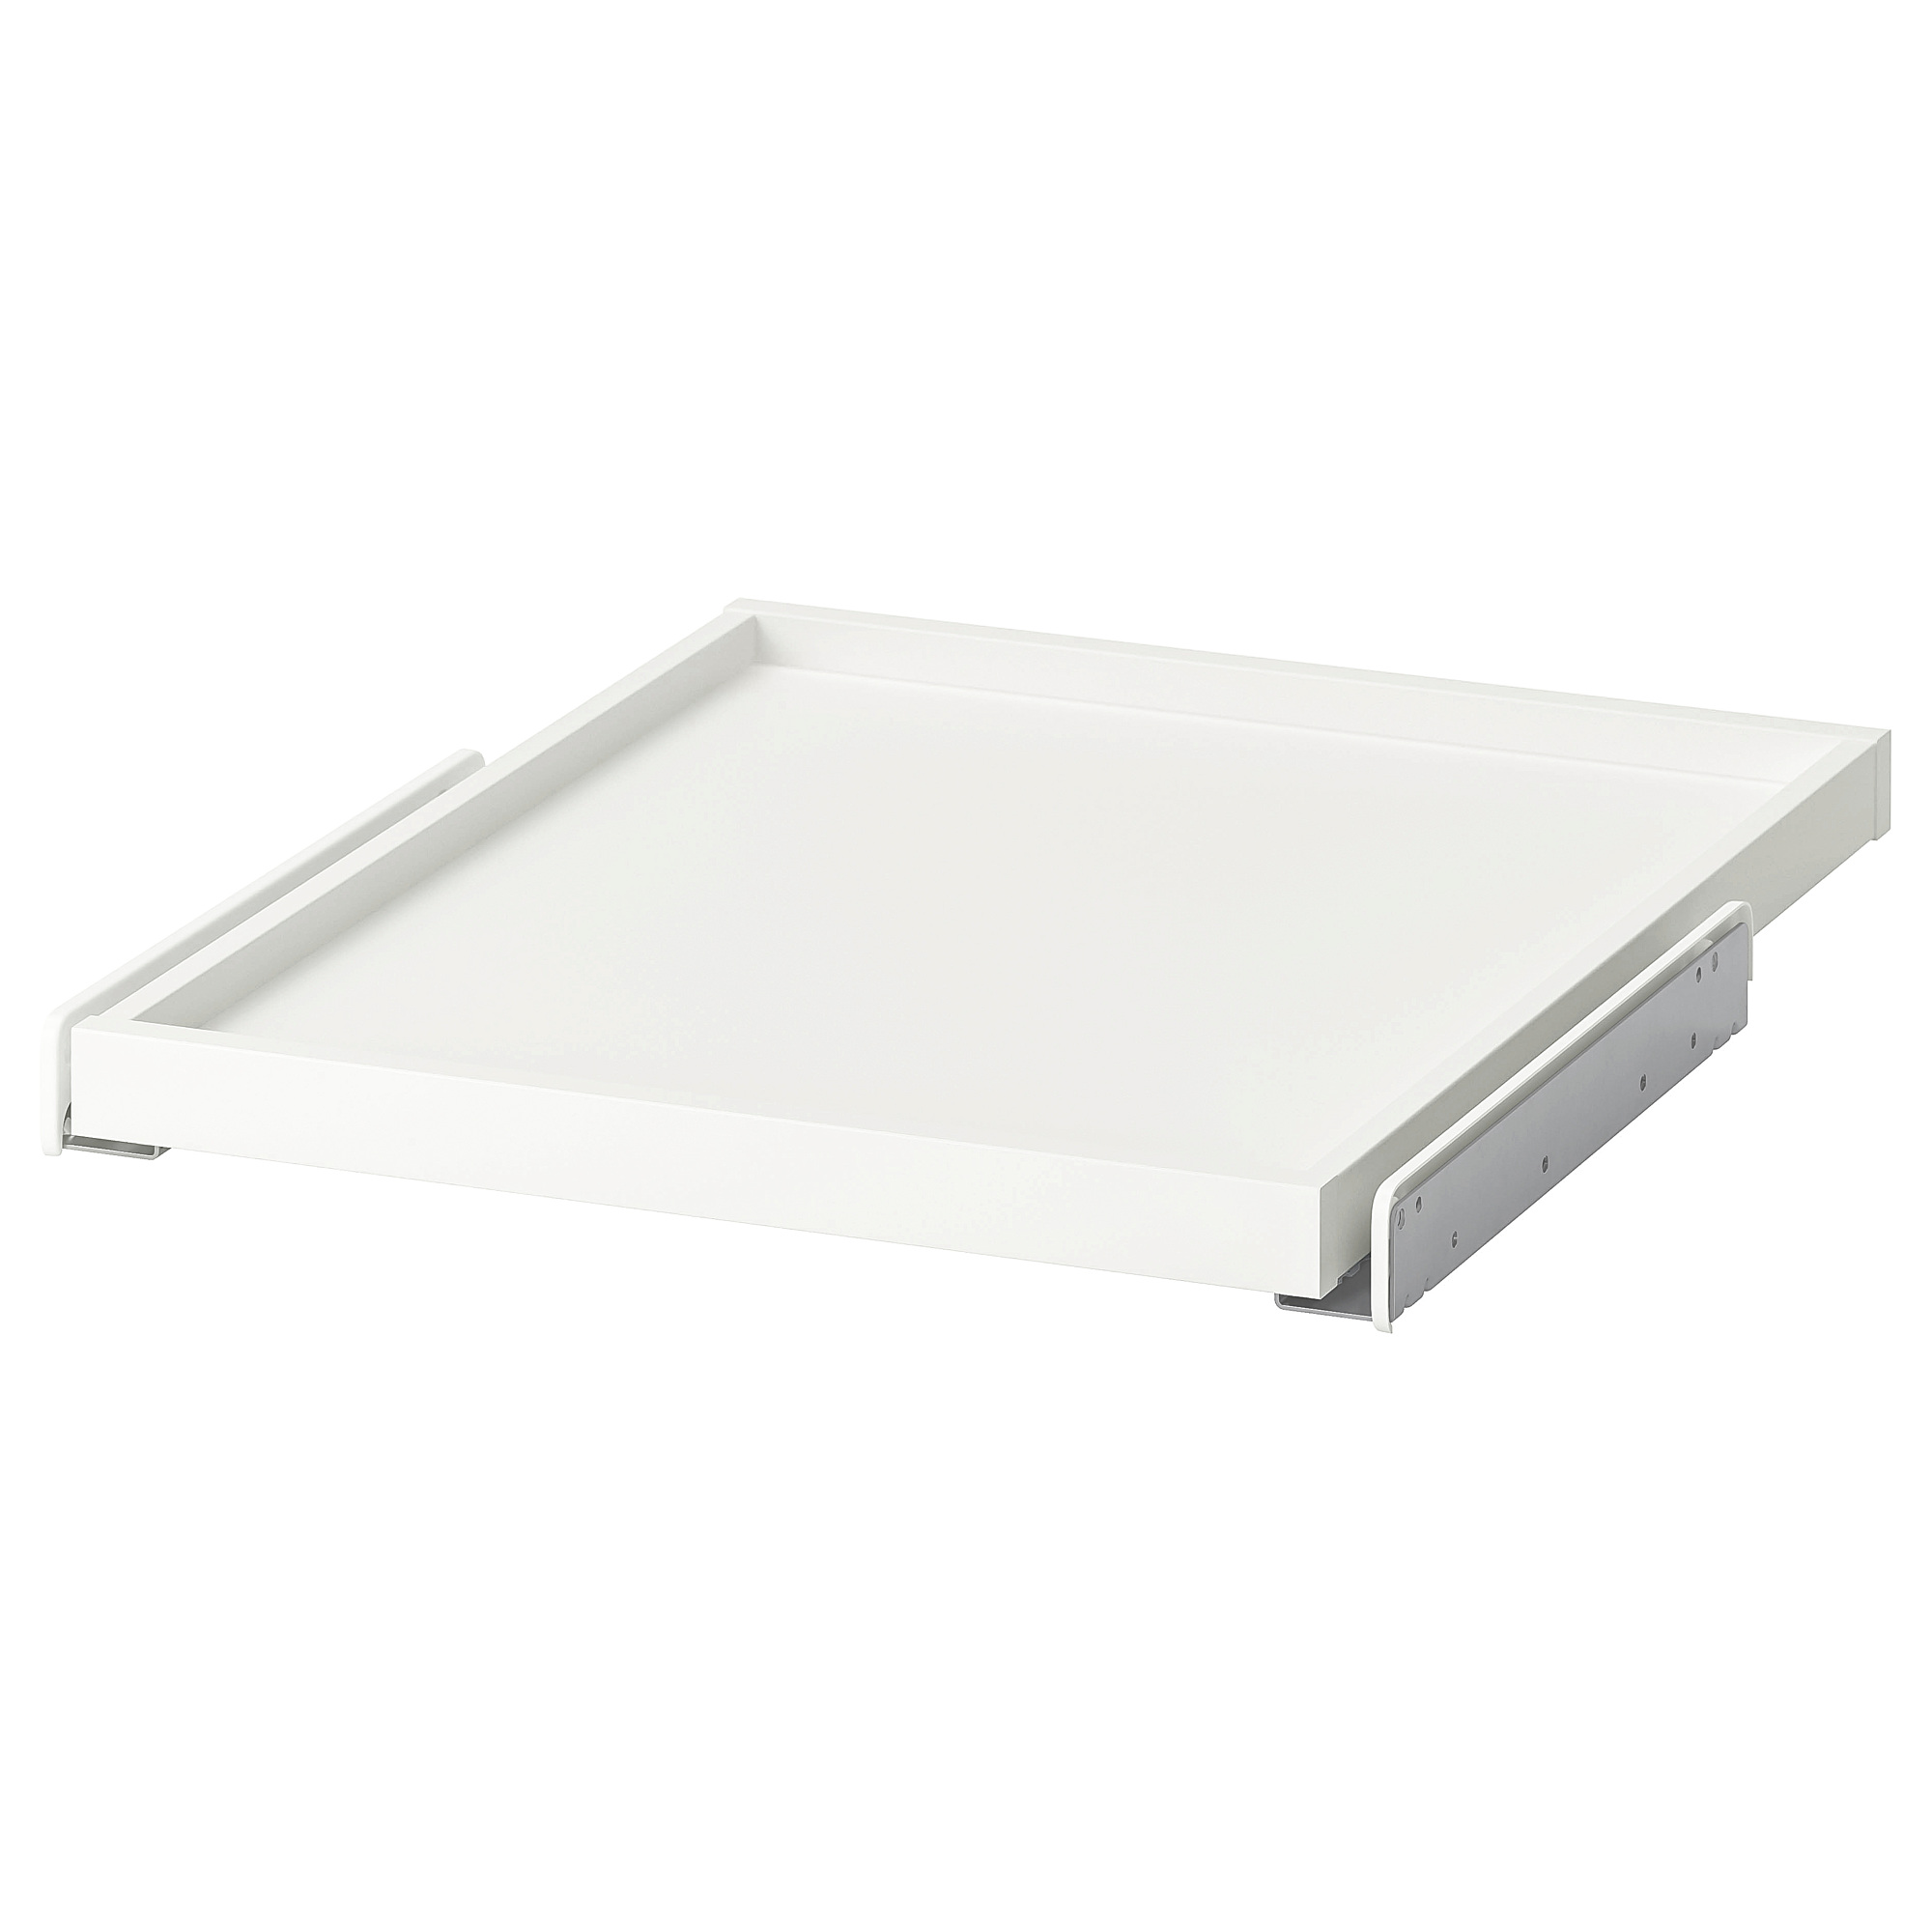 KOMPLEMENT - 拉出式底盤, 白色, 50x58 厘米| IKEA 香港及澳門